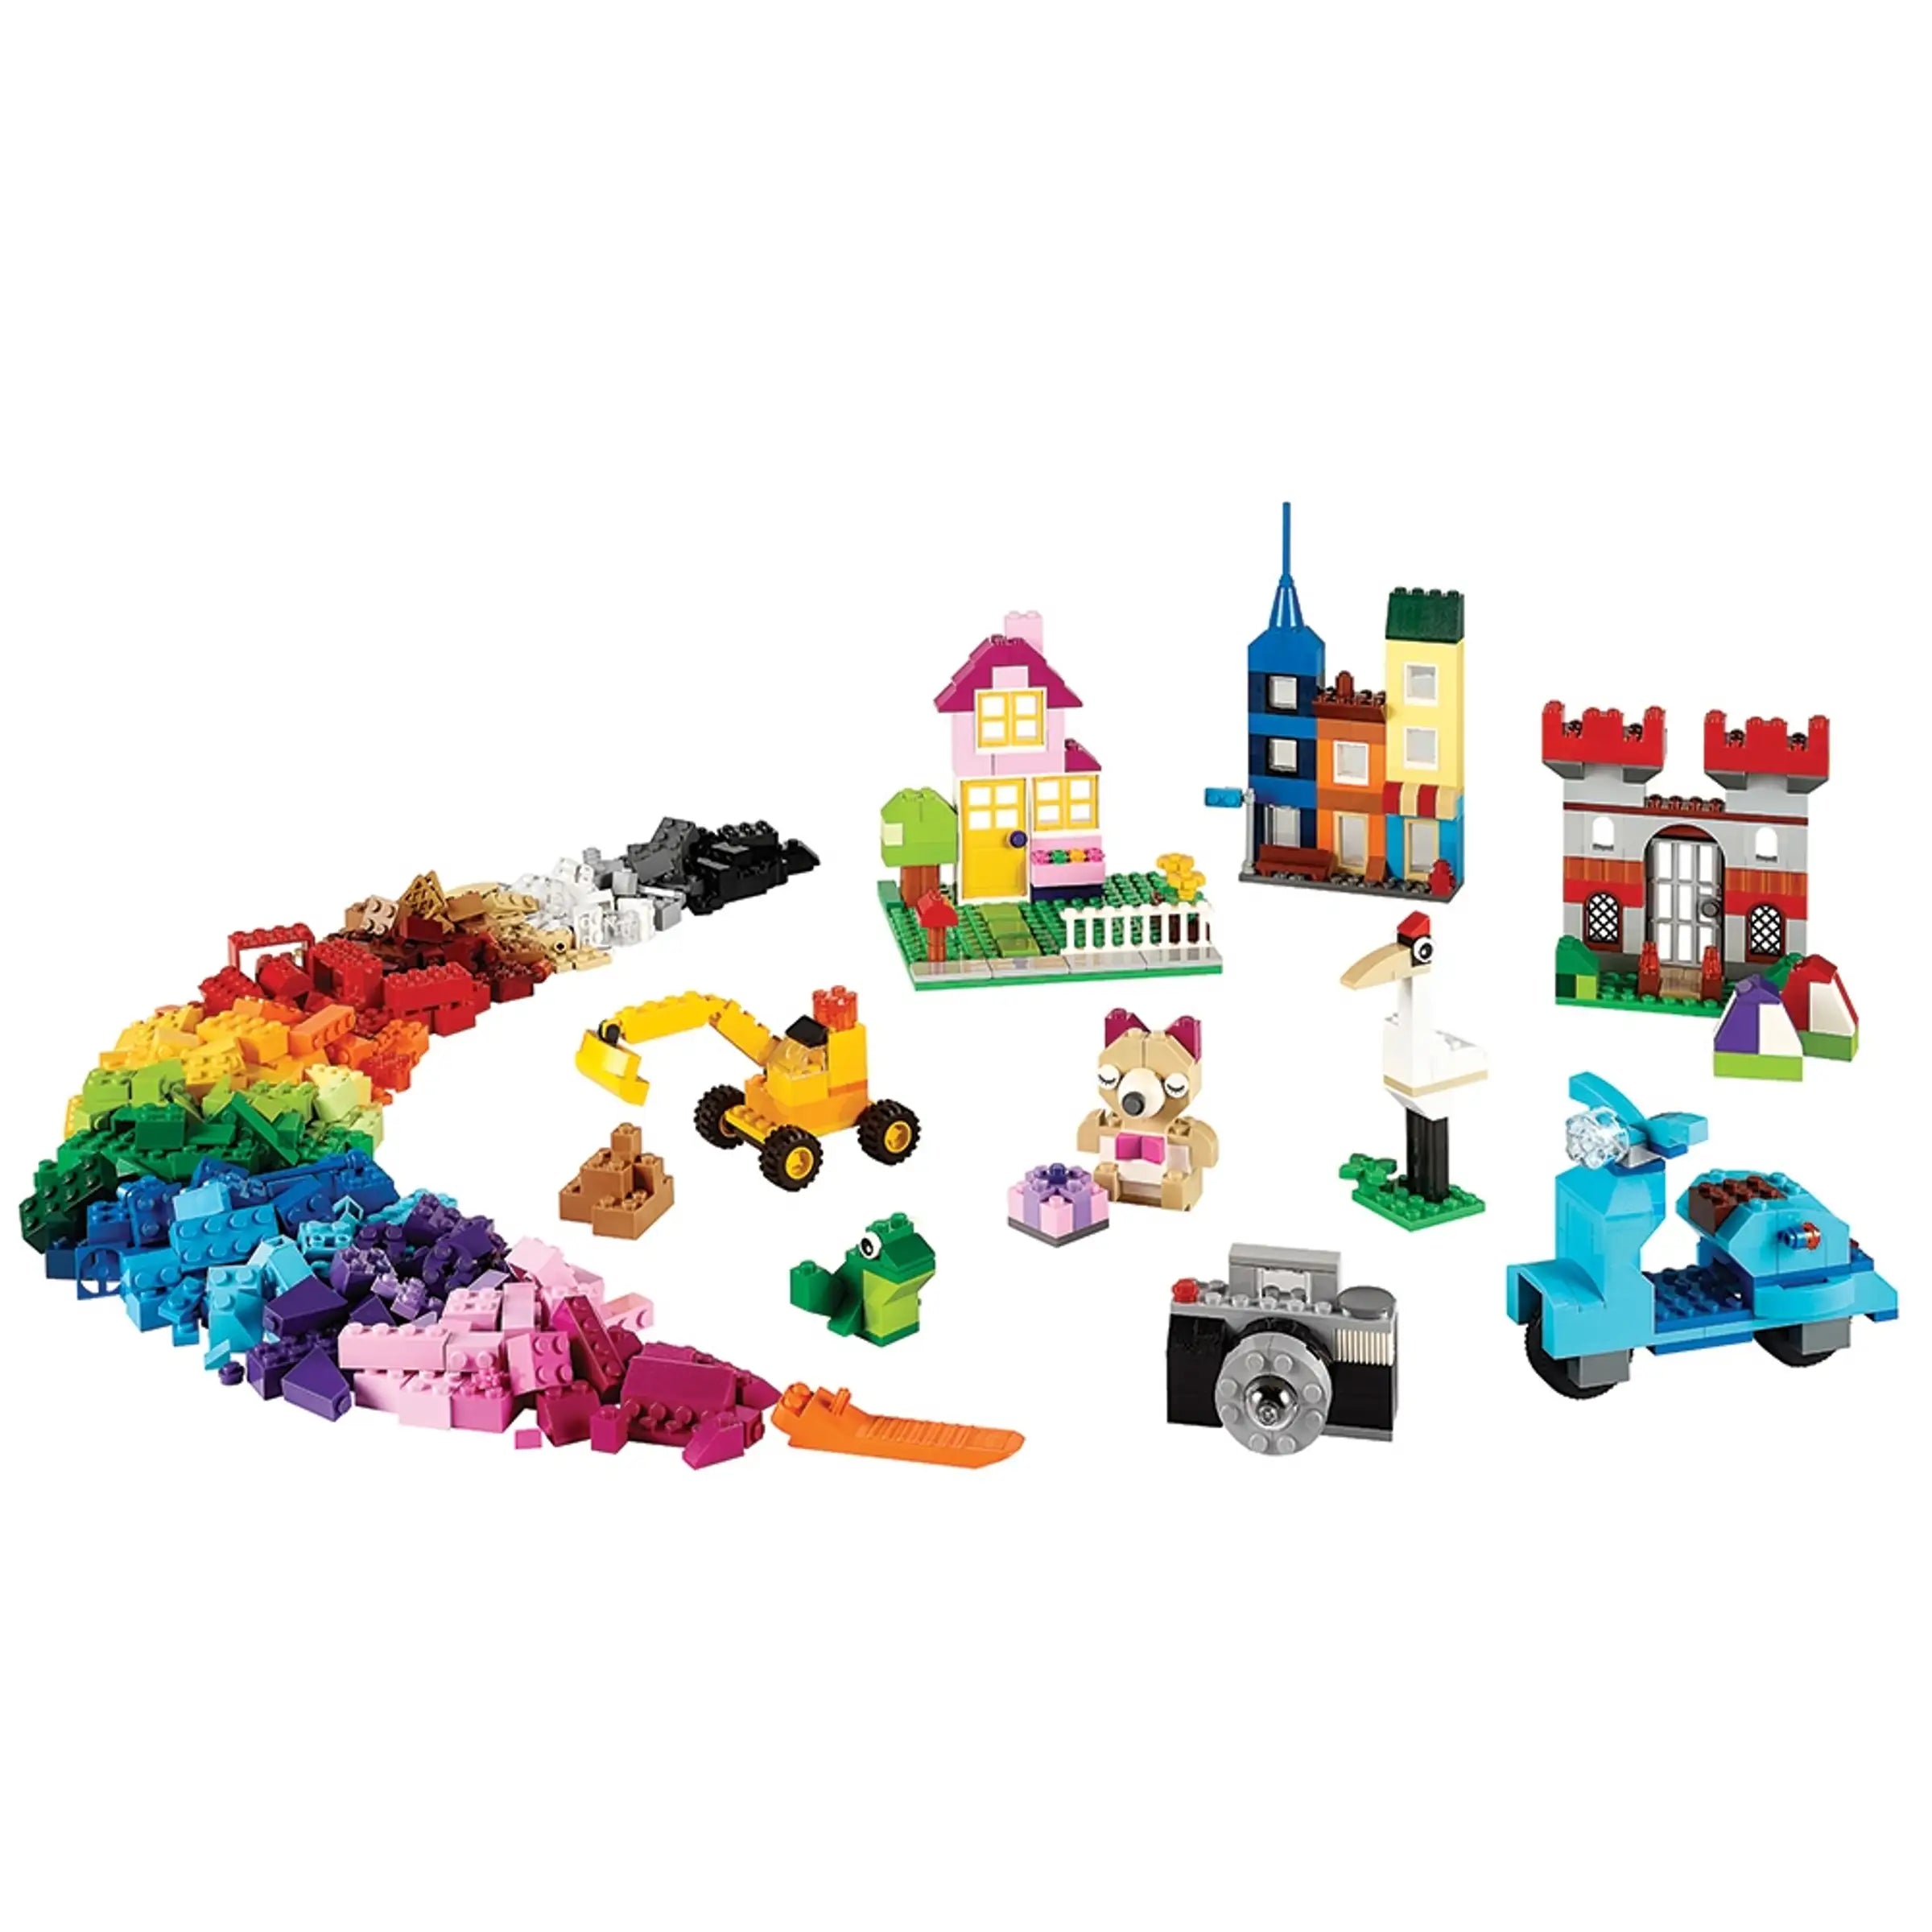 Lego - The big box of LEGO® creative bricks